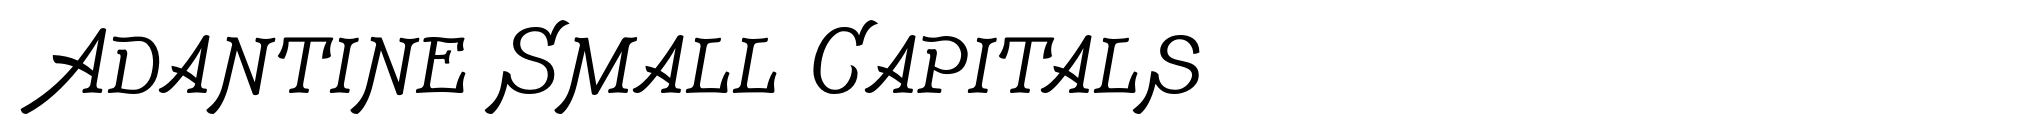 Adantine Small Capitals image